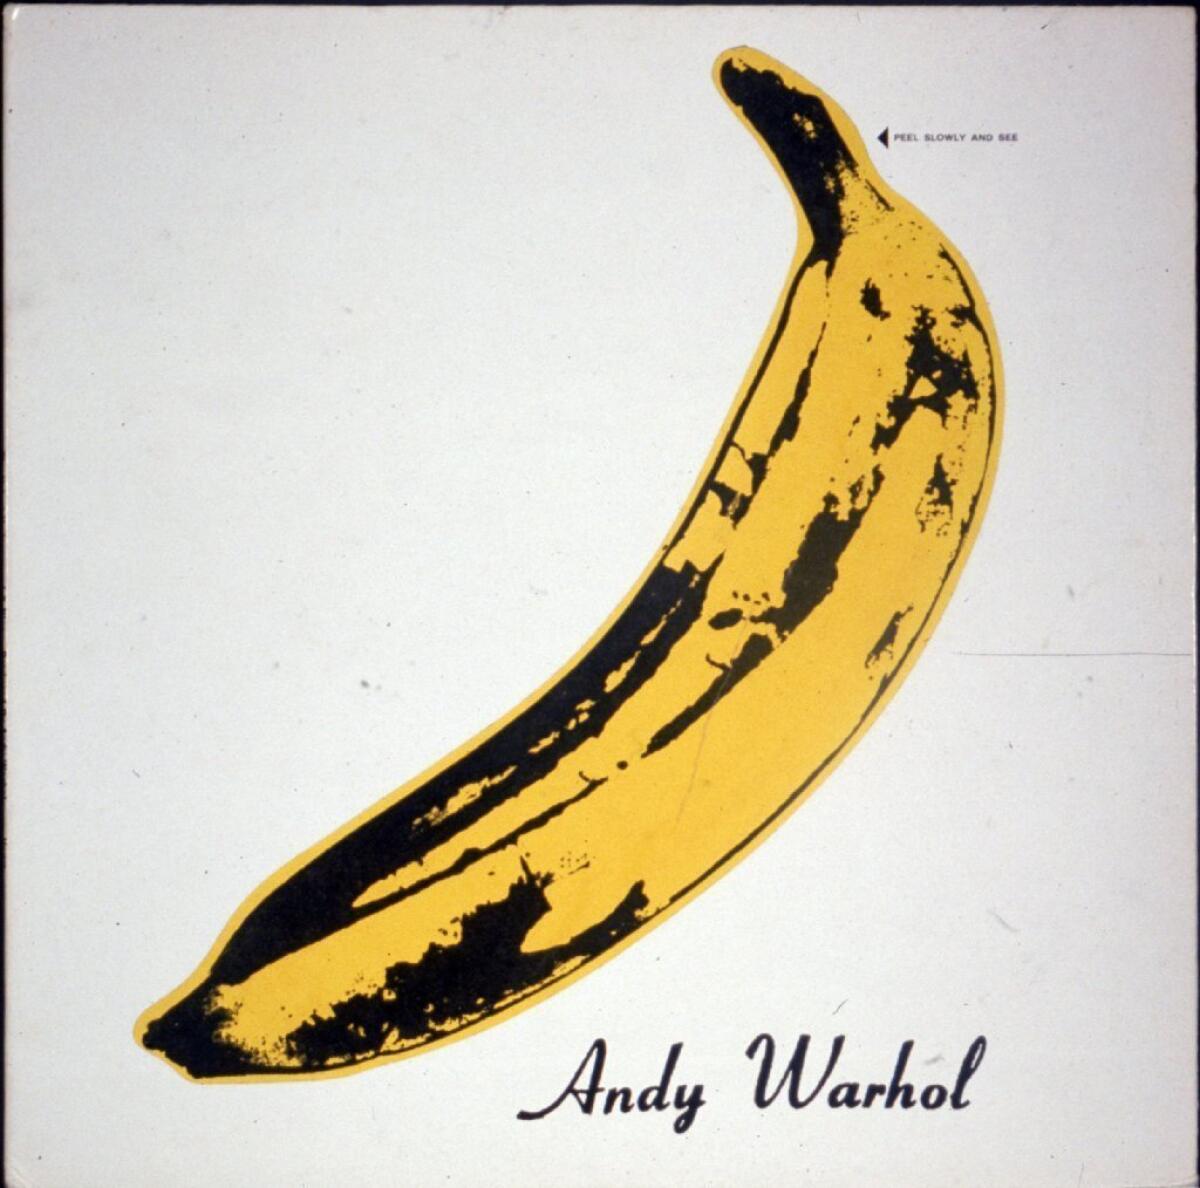 Andy Warhol designed the album cover for "The Velvet Underground & Nico."